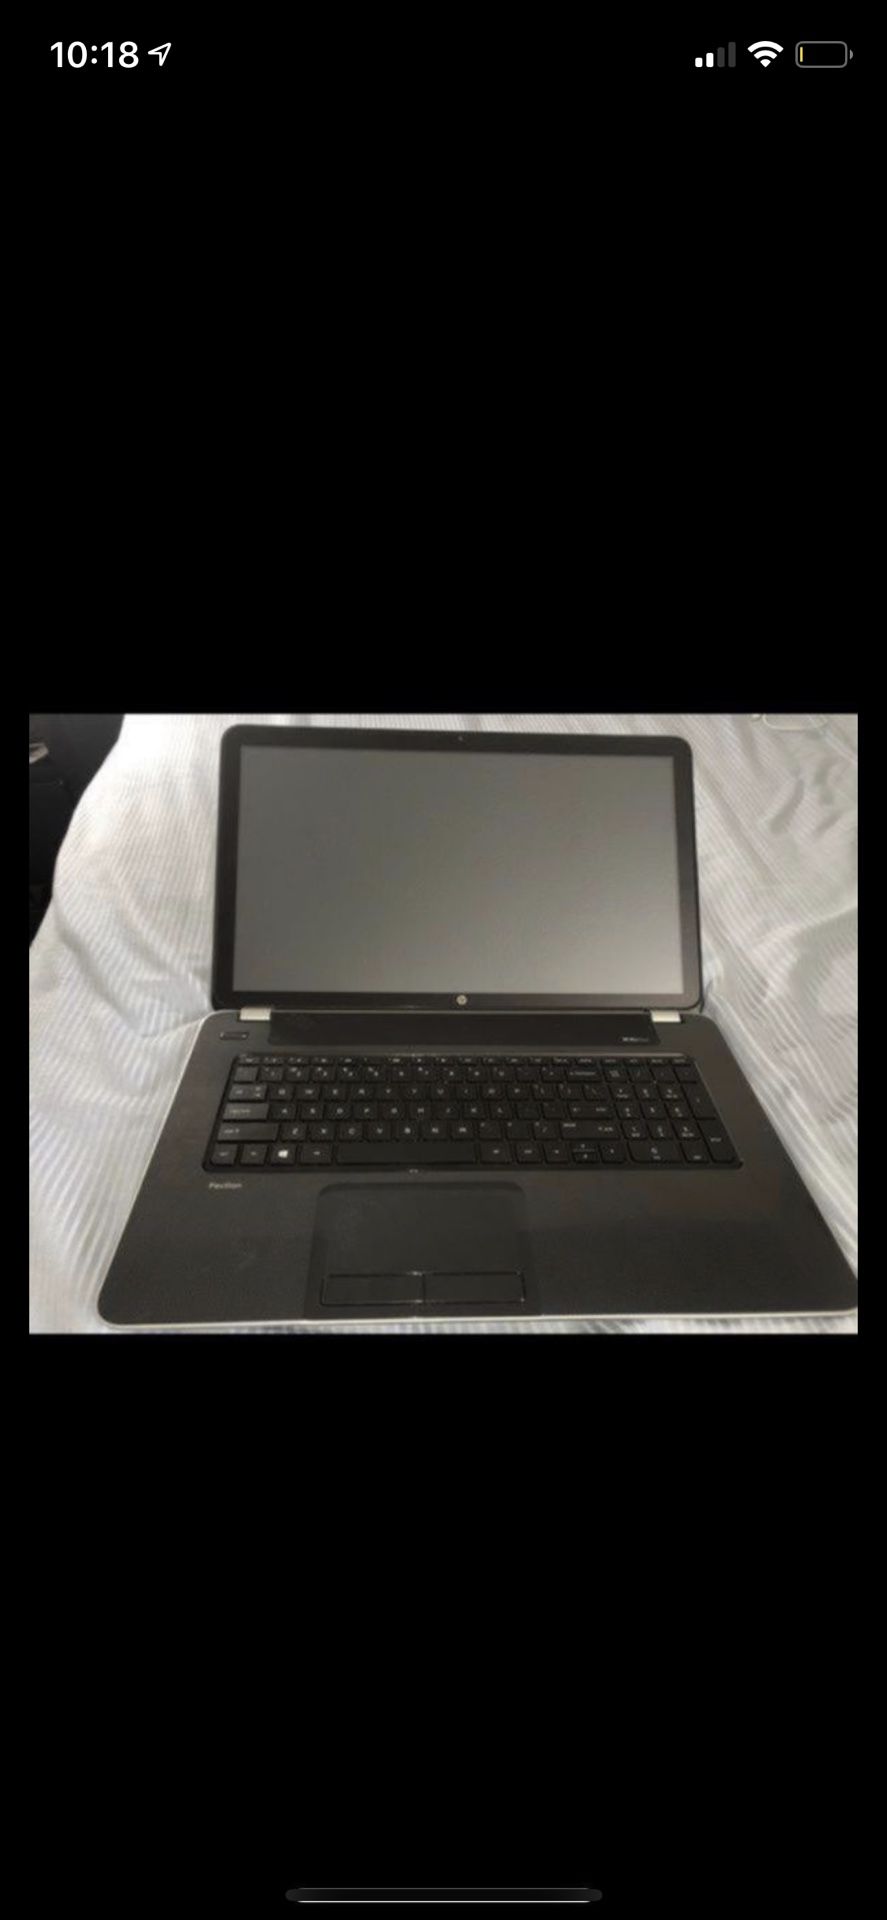 Silver hp pavilion laptop